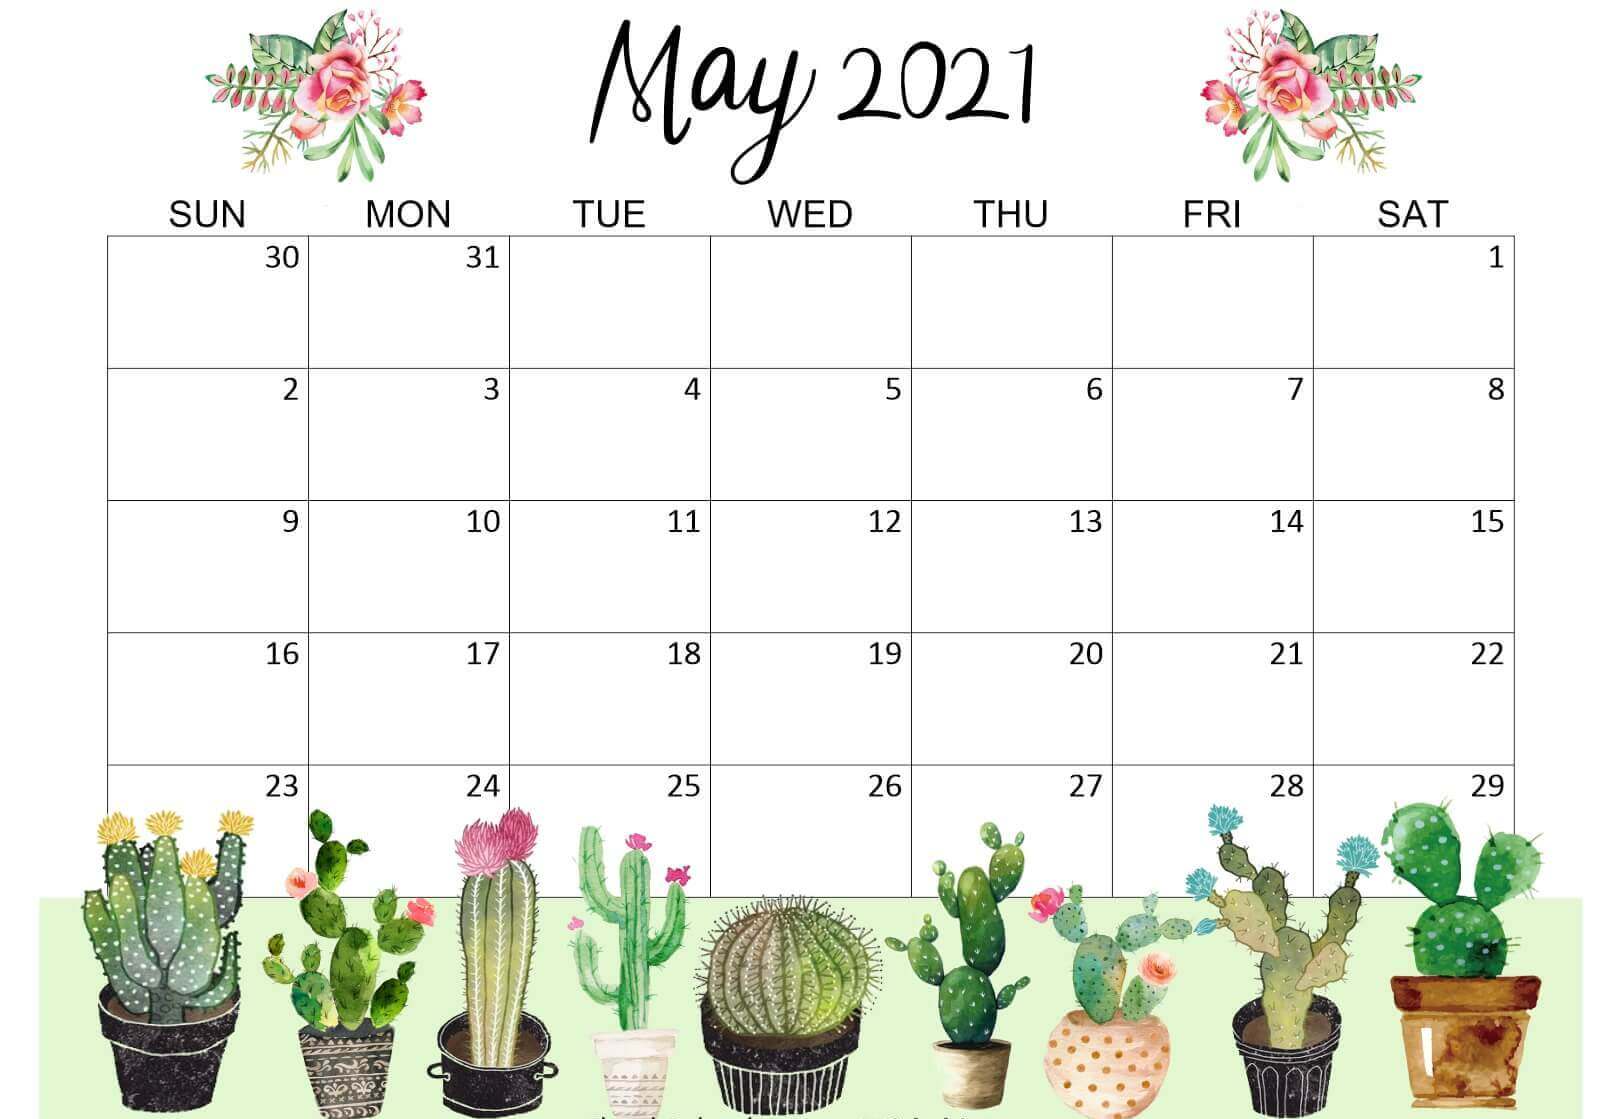 May 2021 Calendar Wallpaper